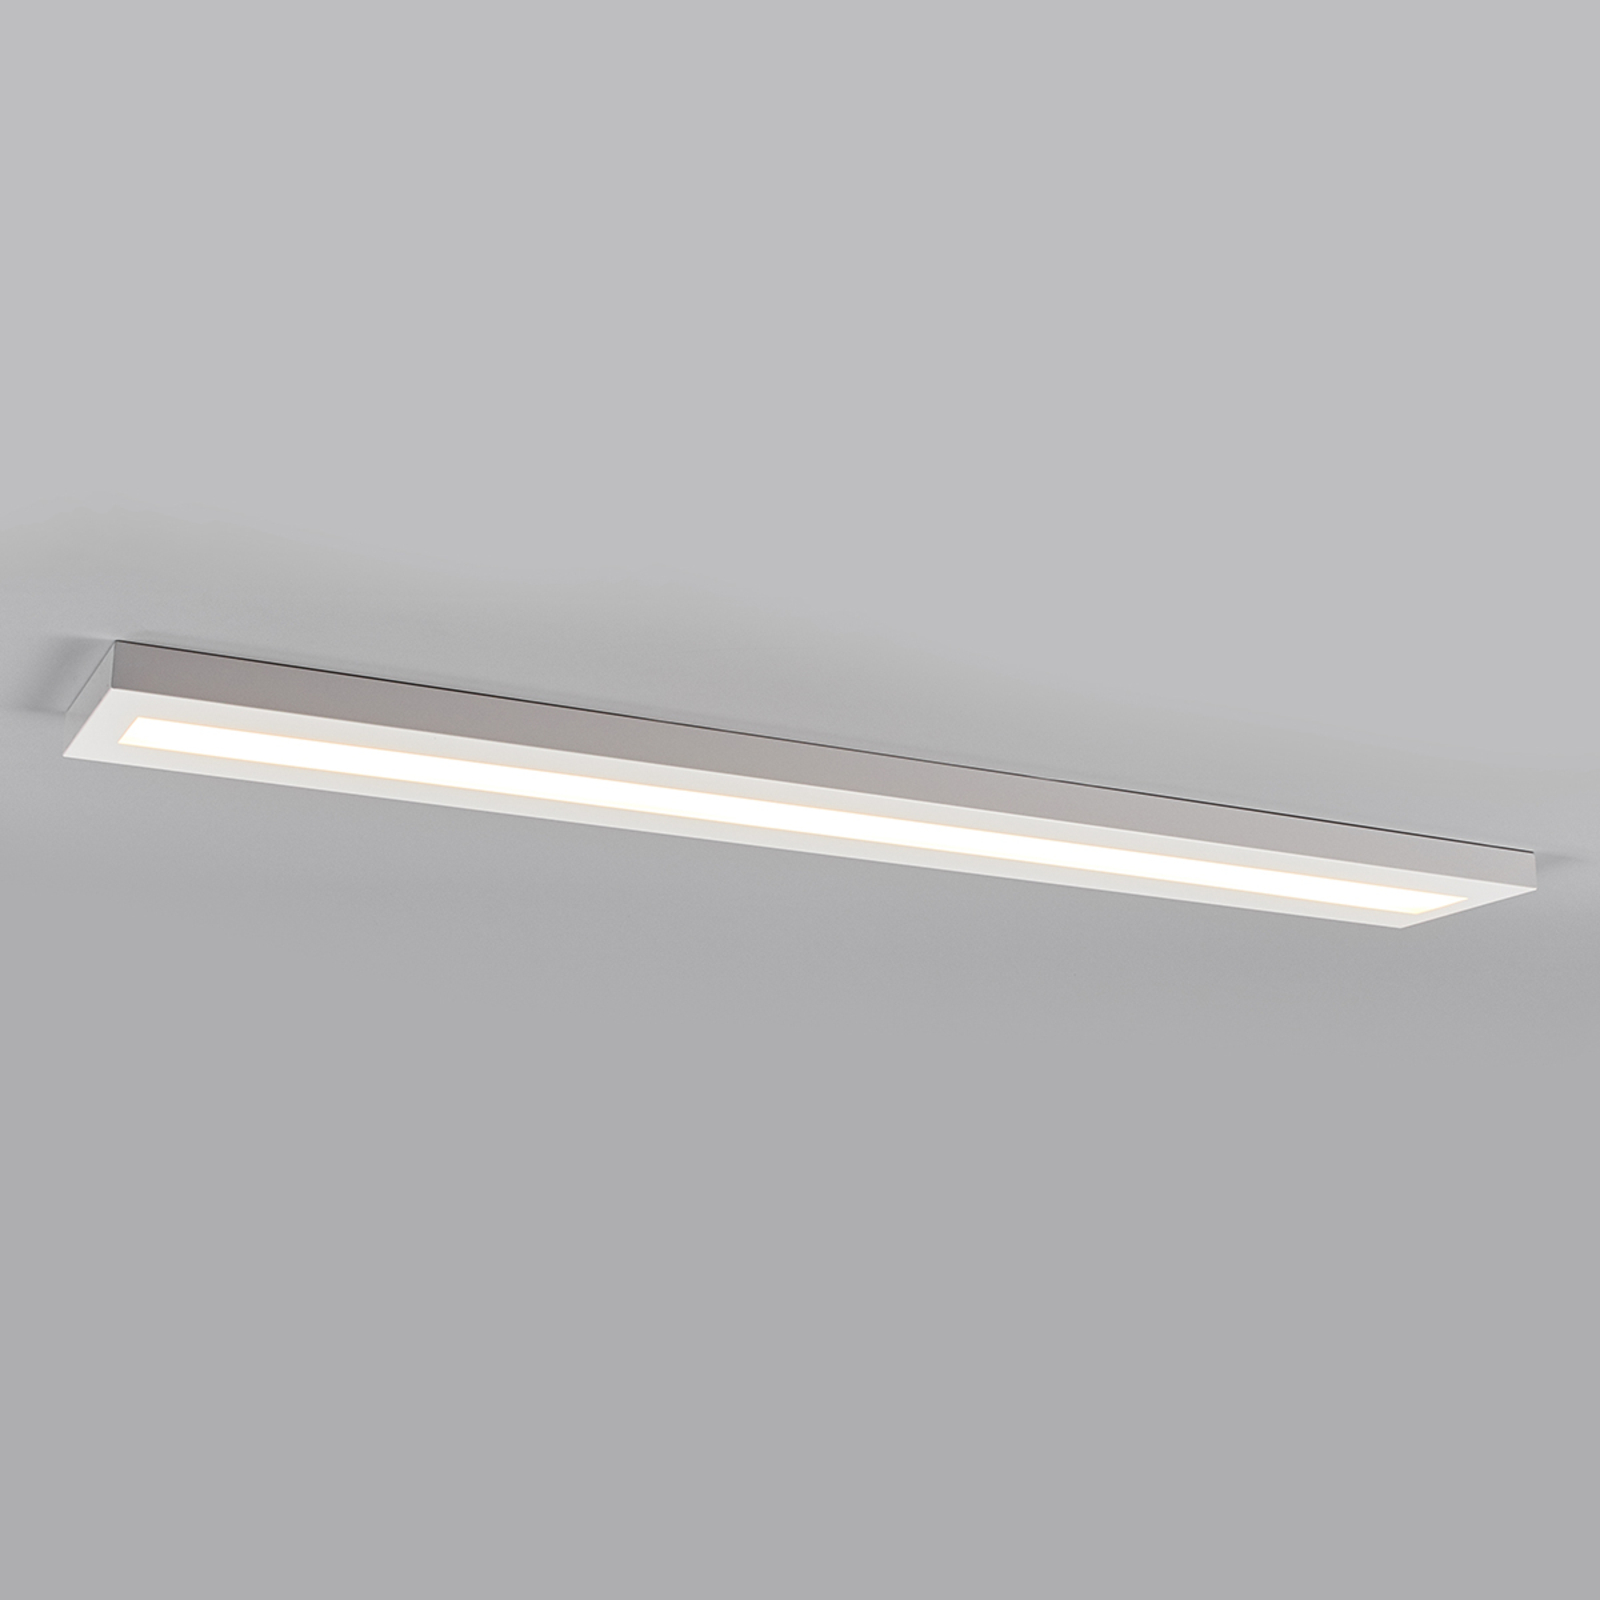 Plafonnier LED oblong 36 W, blanc, BAP